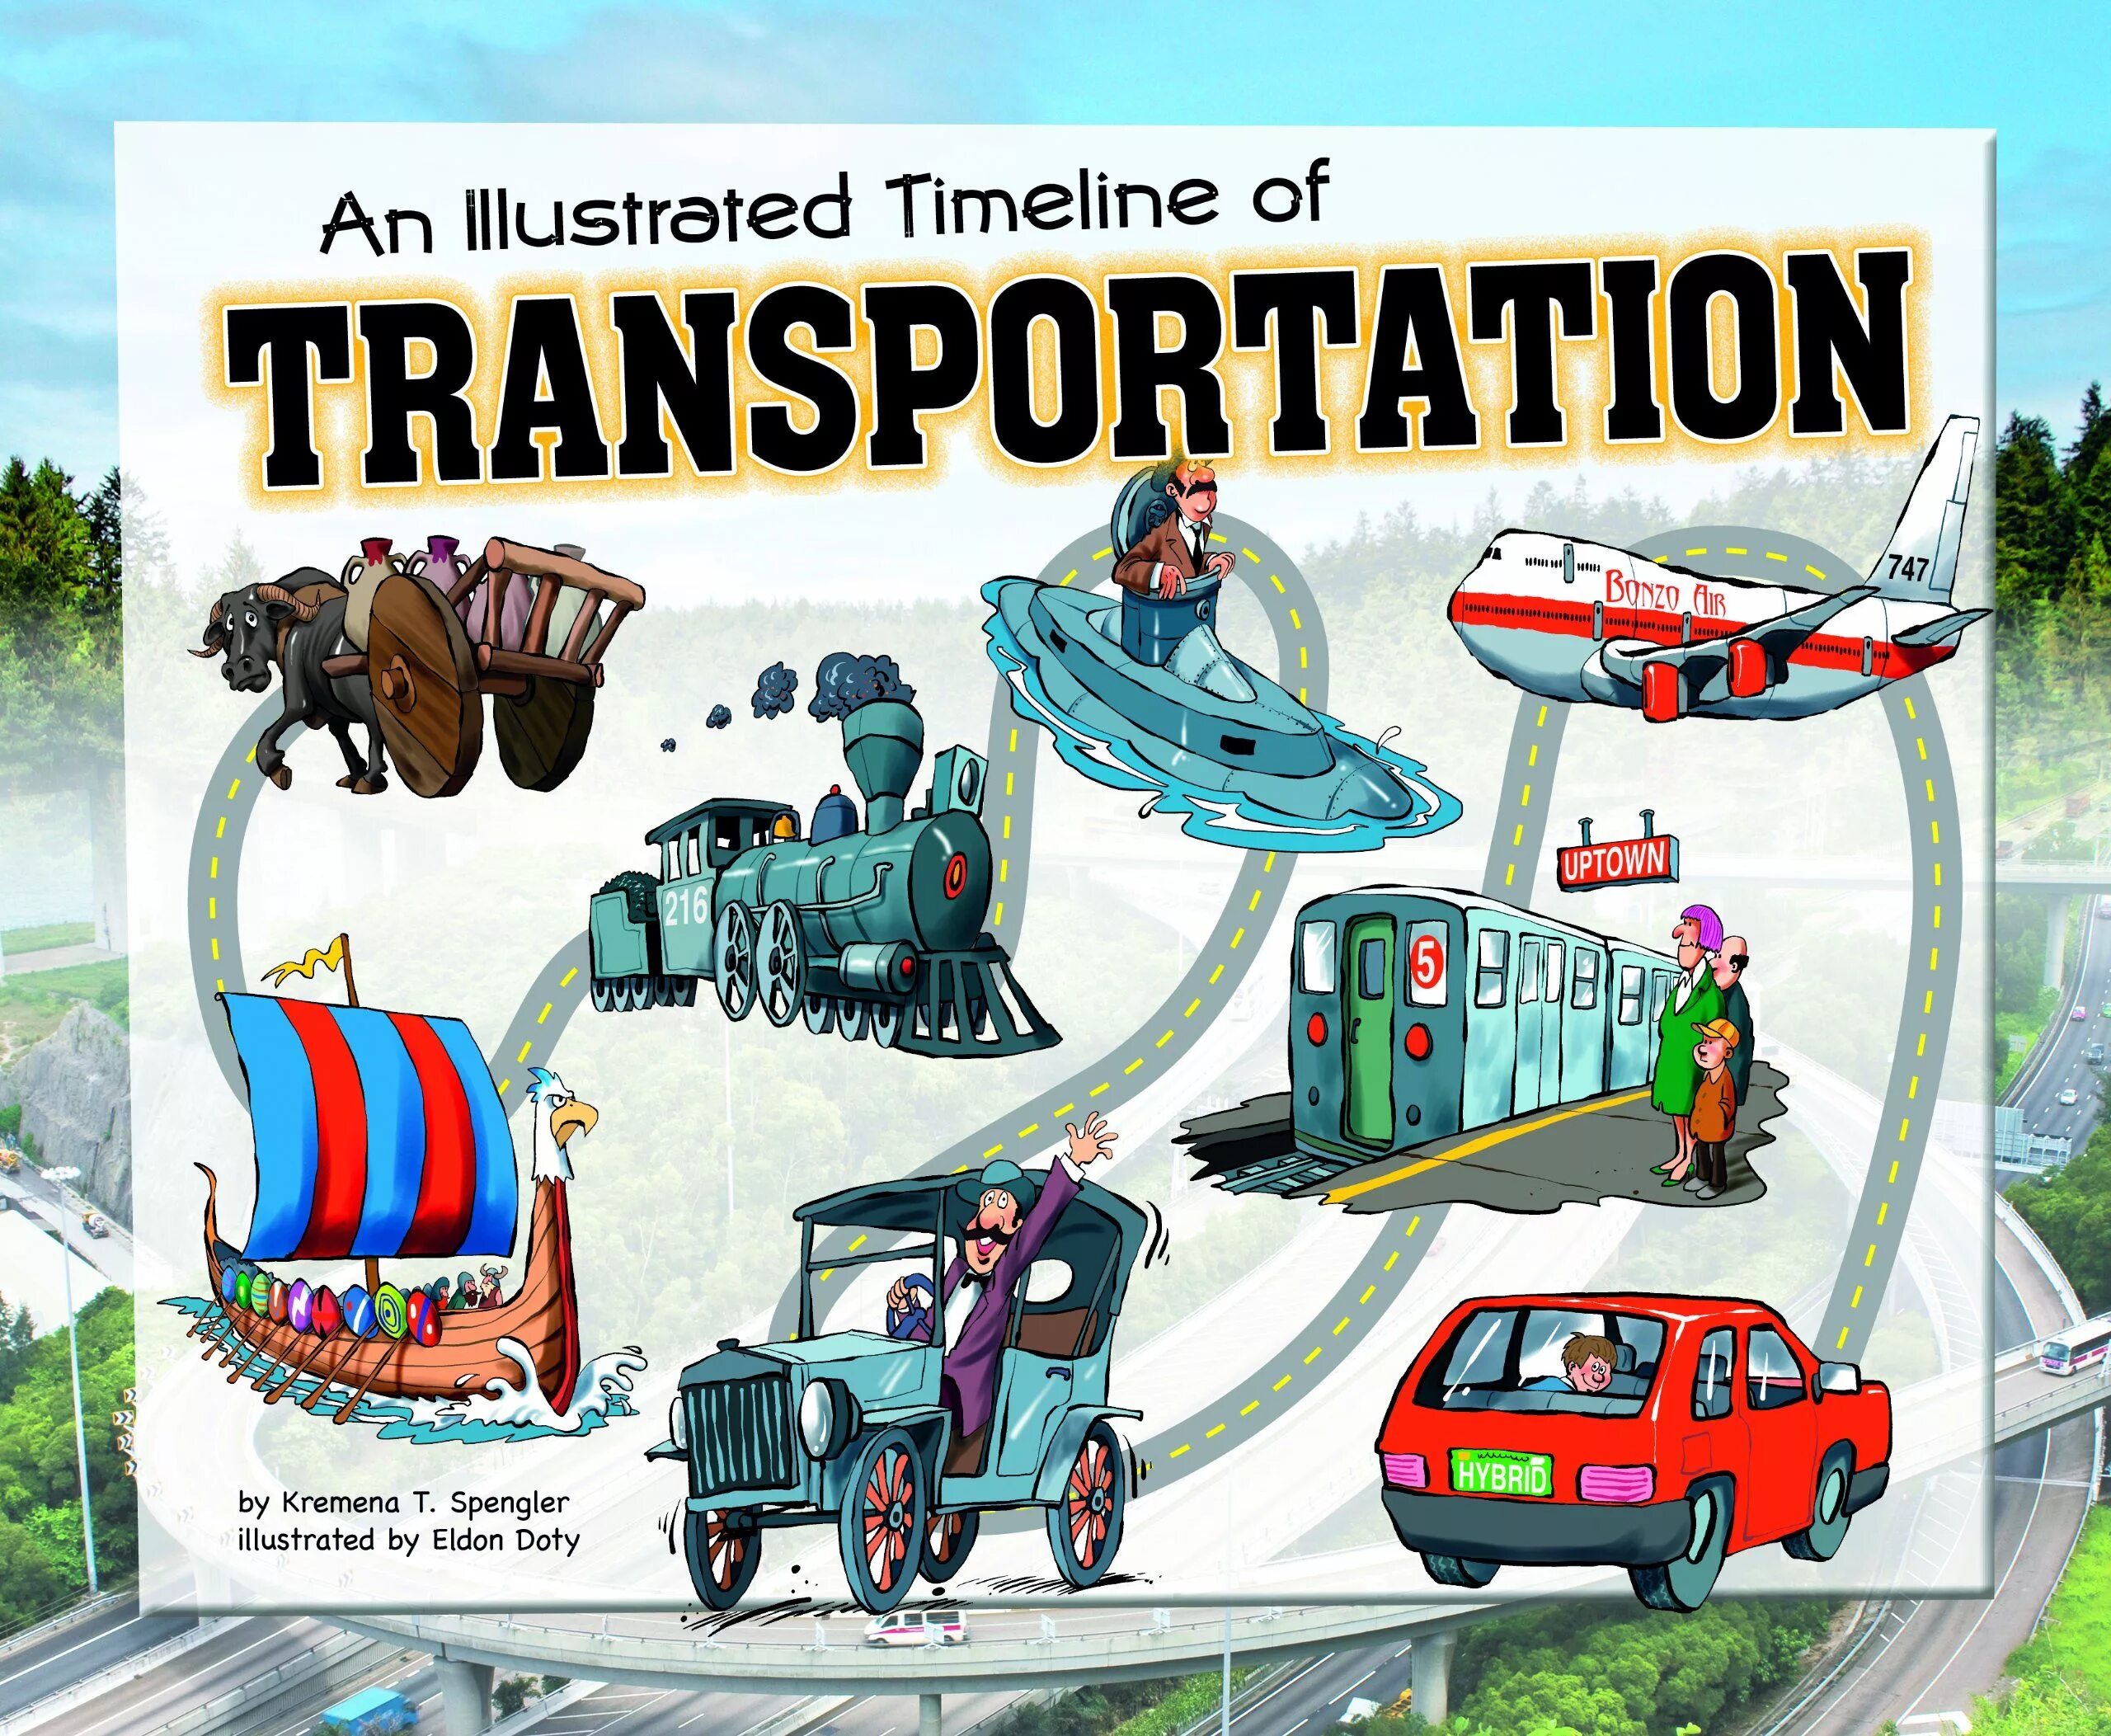 Эволюция транспорта в картинках. History of transport. The History of Transportation. History illustrated журнал. История транспорта книги